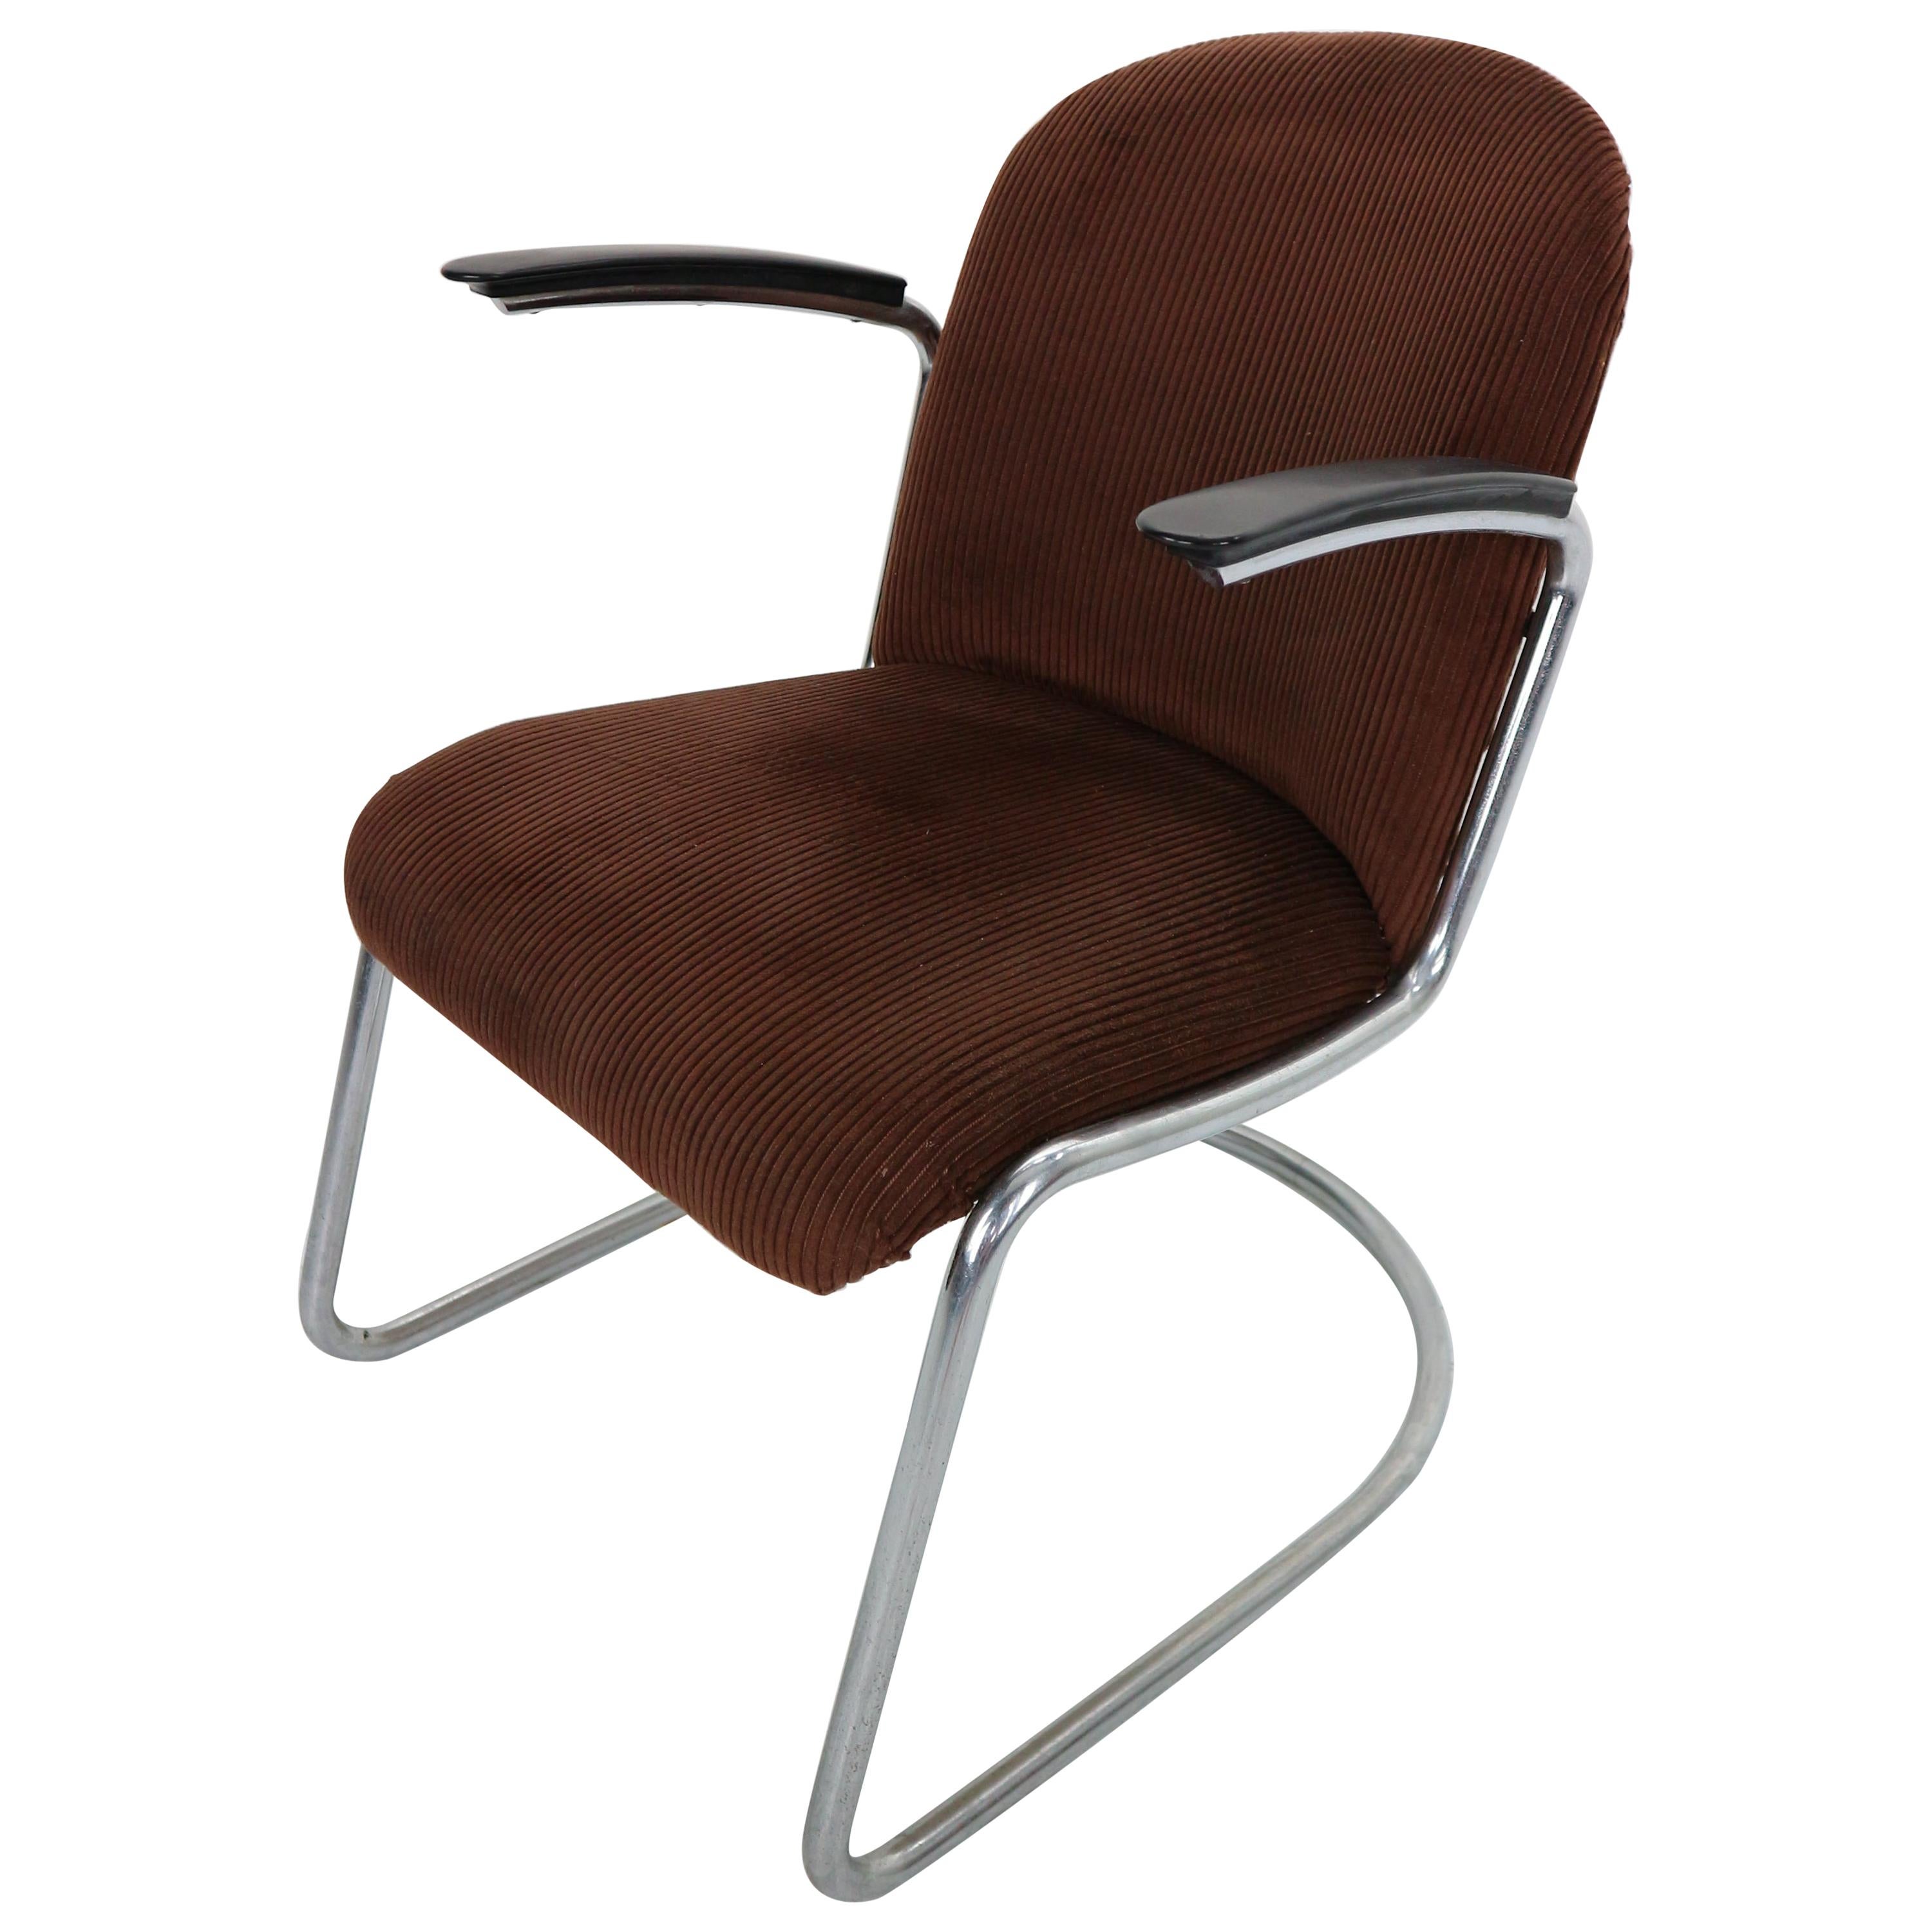 W.H. Gispen by Gispen Culemborg, M-413 Easy Lounge Chair, Dutch Design, 1953